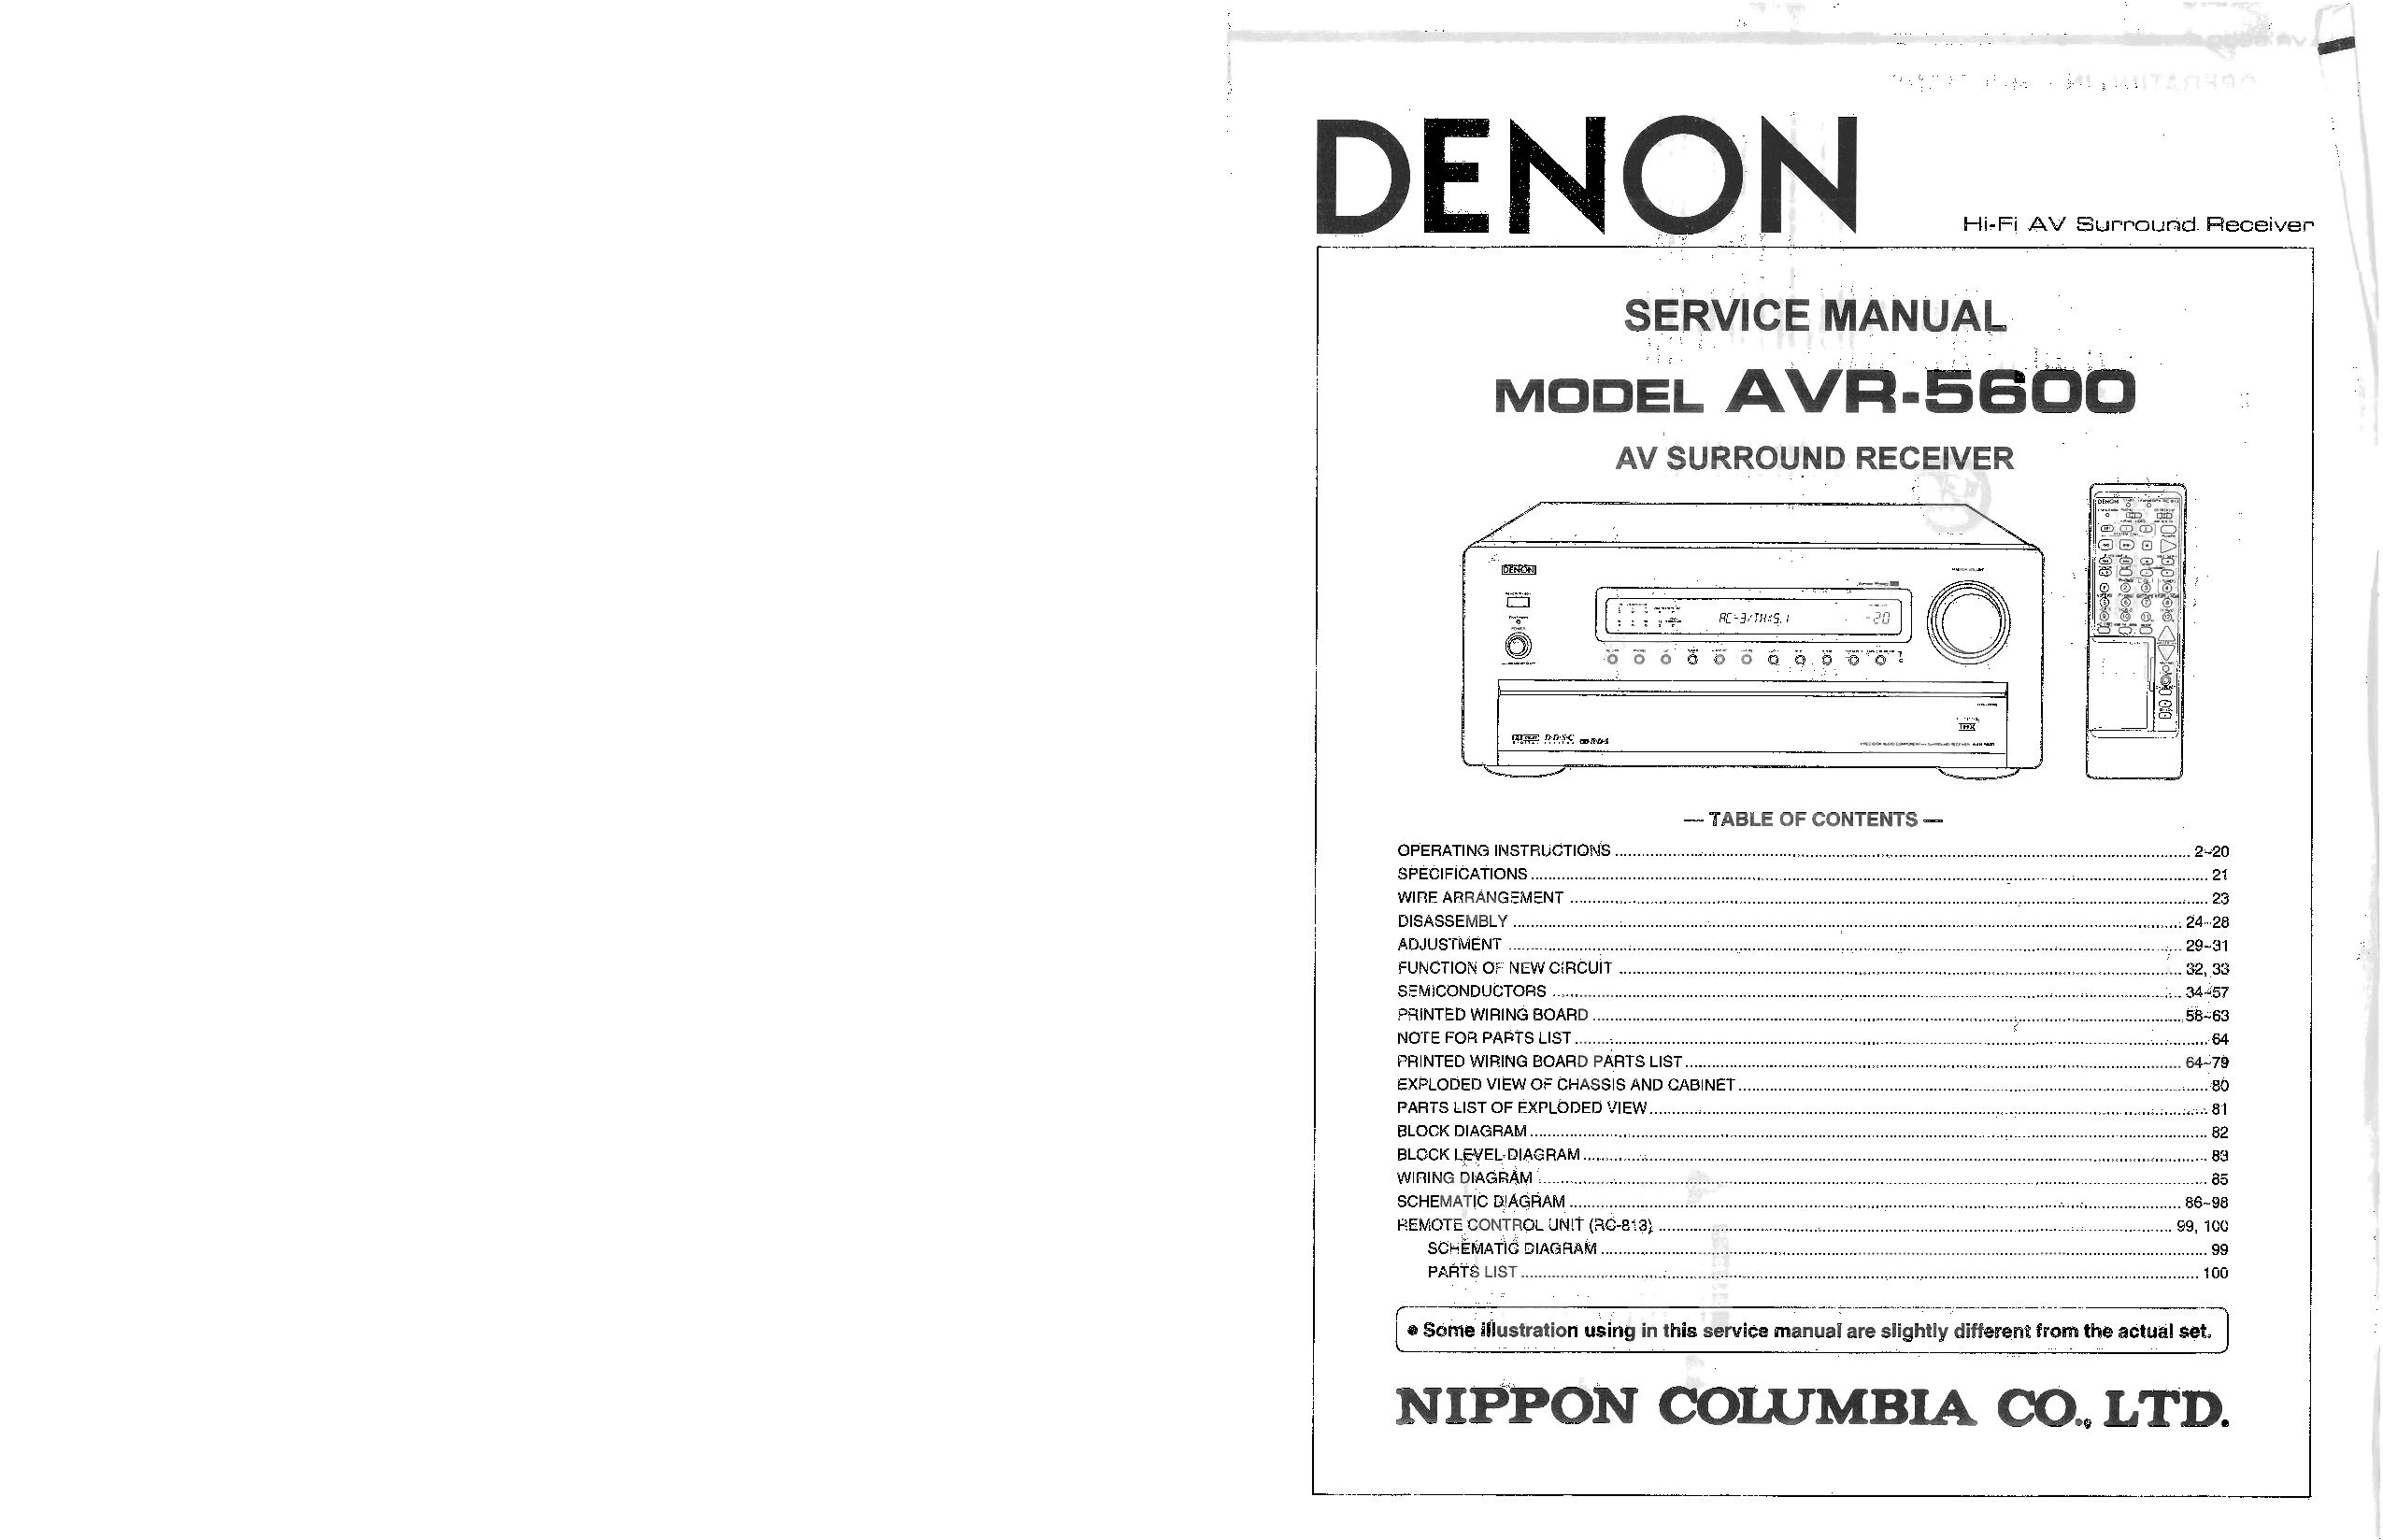 Denon AVR-5600 Service Manual